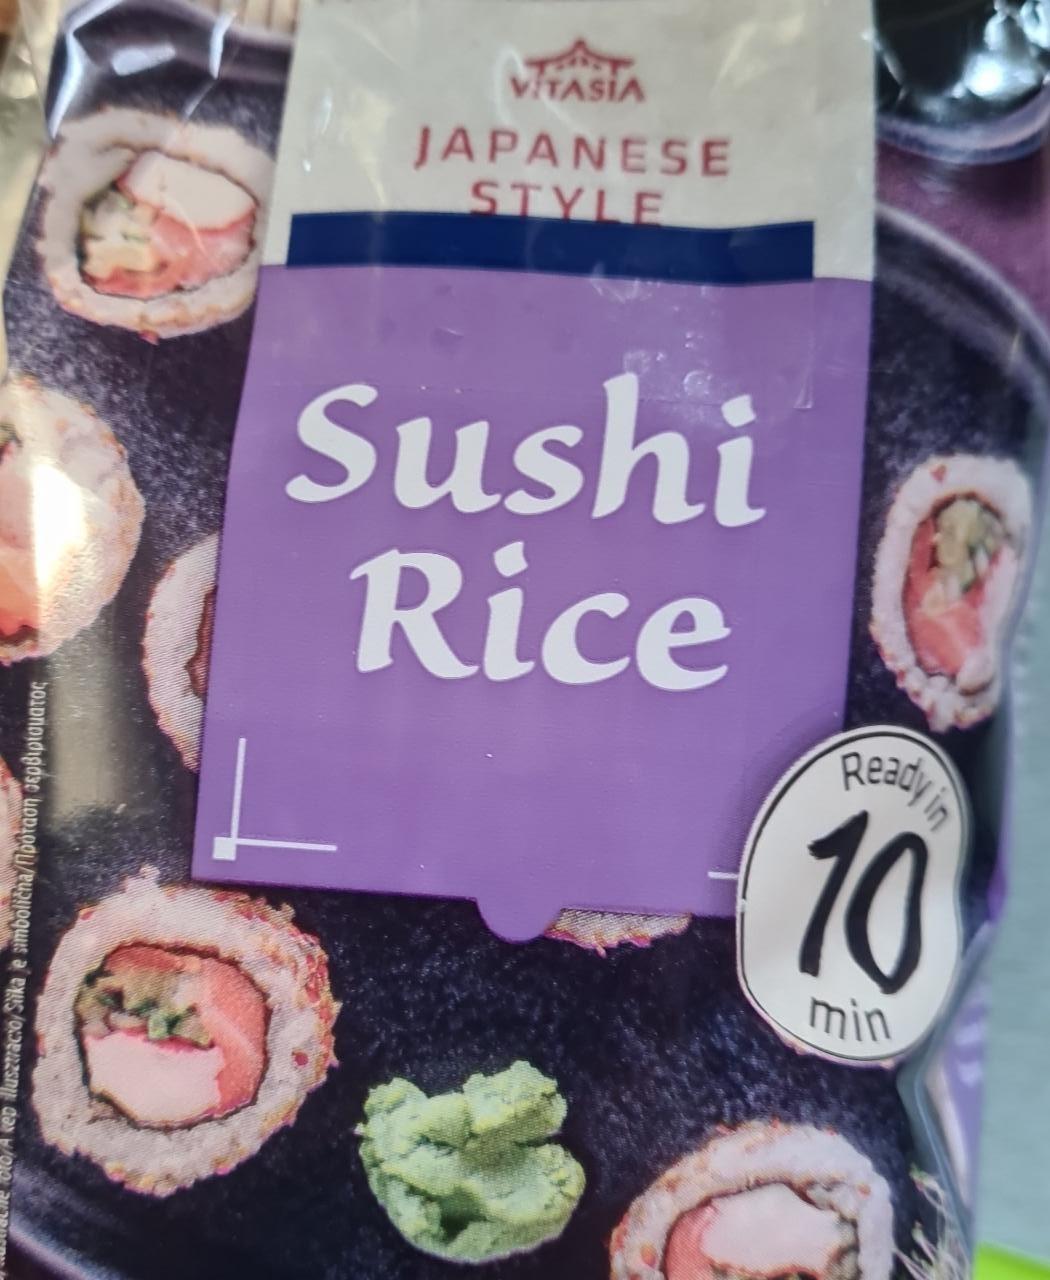 Képek - Sushi rice Japanese style Vitasia